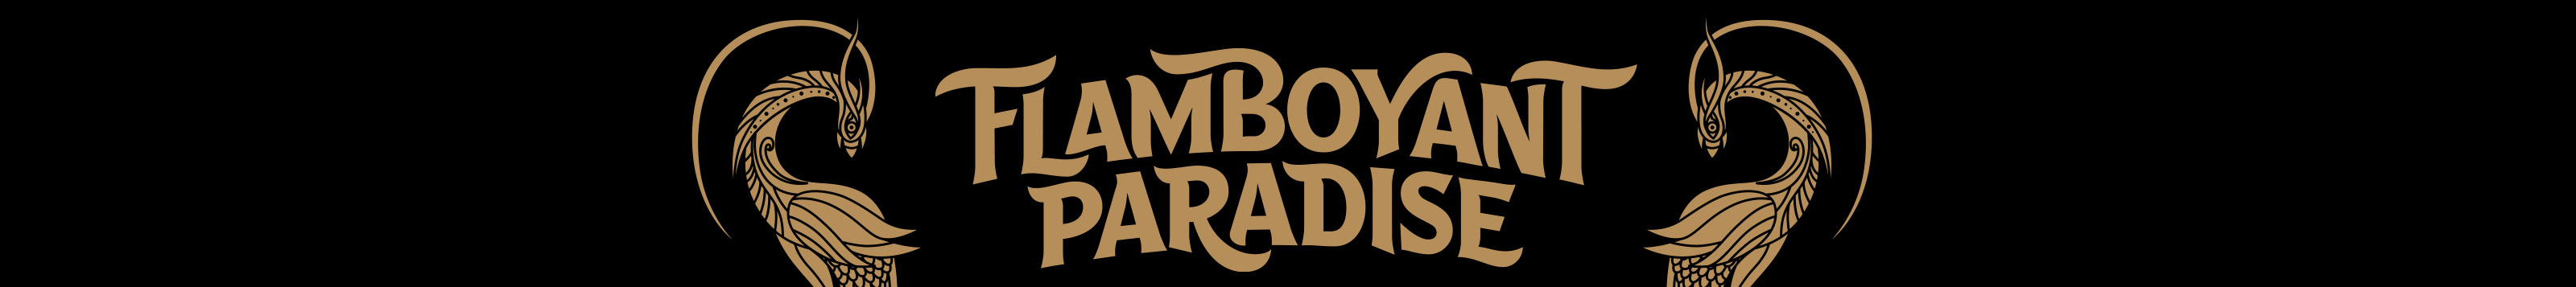 Javier Lourenço / Flamboyant Paradise's profile banner